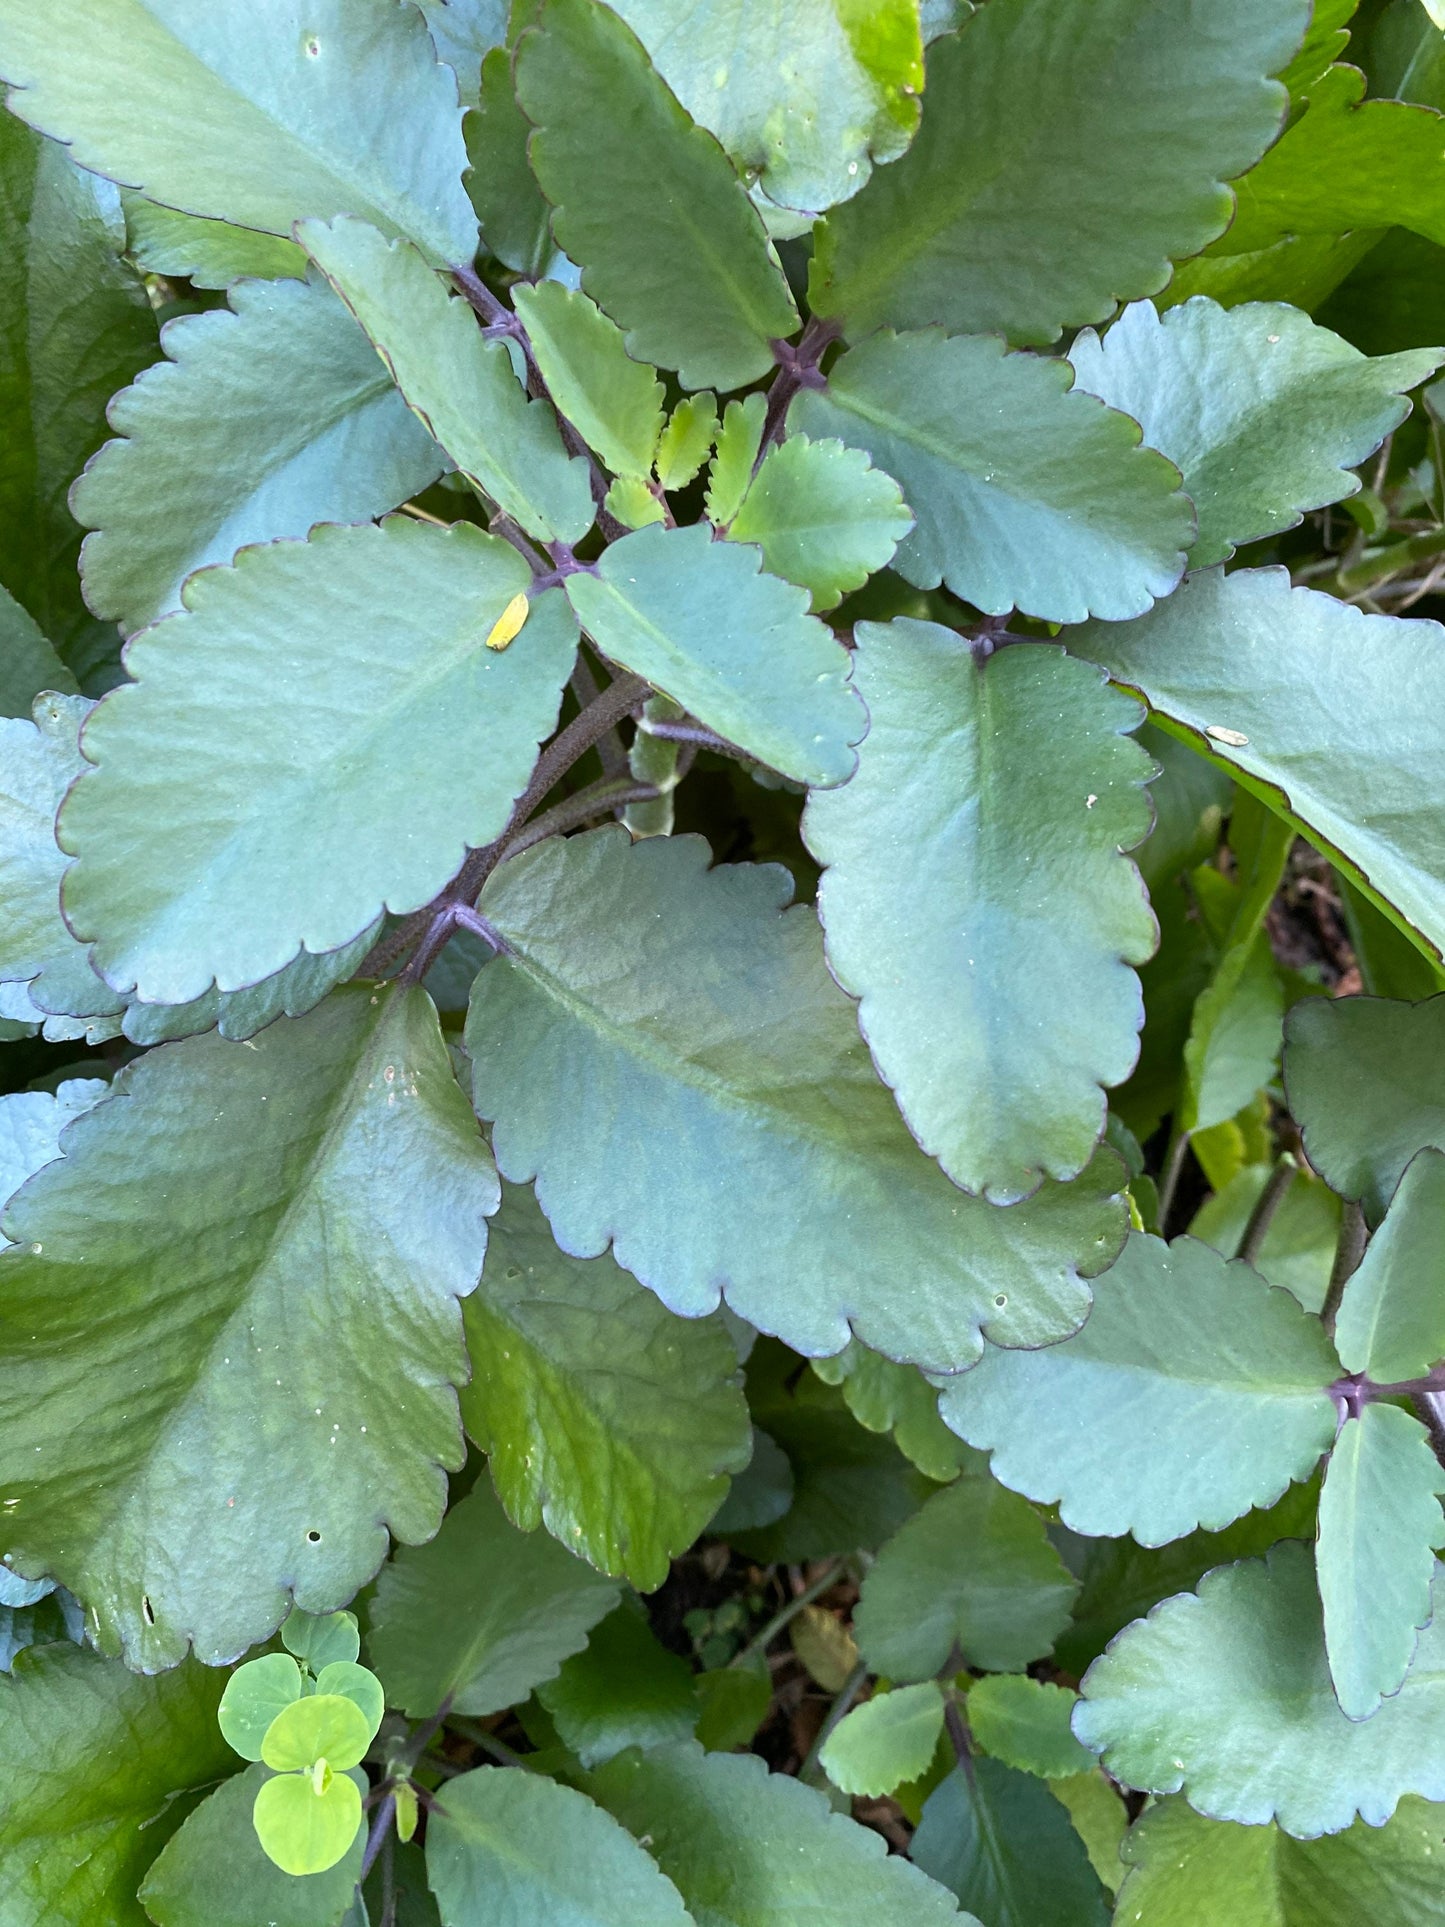 RARE KALANCHOE PINNATA miracle leaf Of Life, Air plants, Bryophyllum Pinnatum 4” to 6” plant